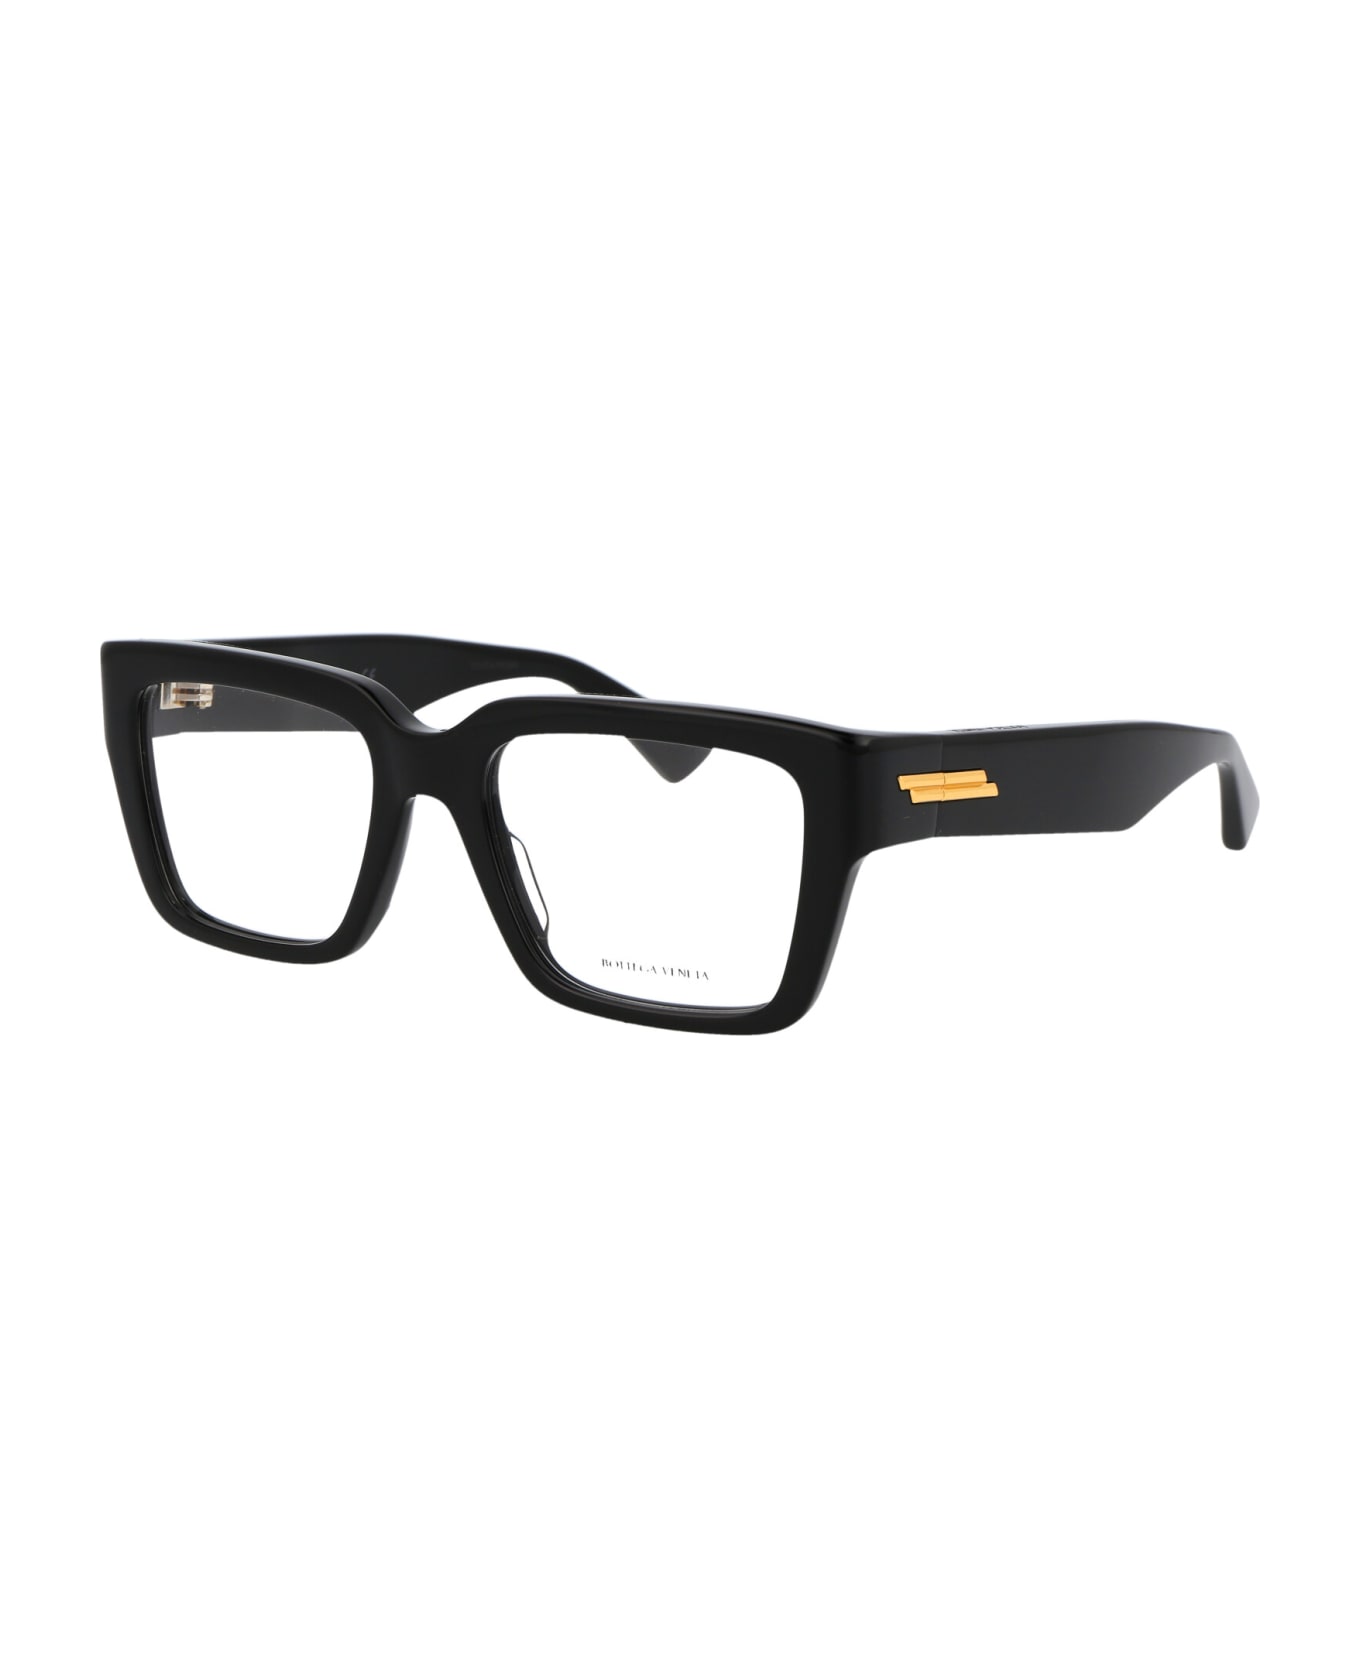 Bottega Veneta Eyewear Bv1153o Glasses - 005 BLACK BLACK TRANSPARENT アイウェア